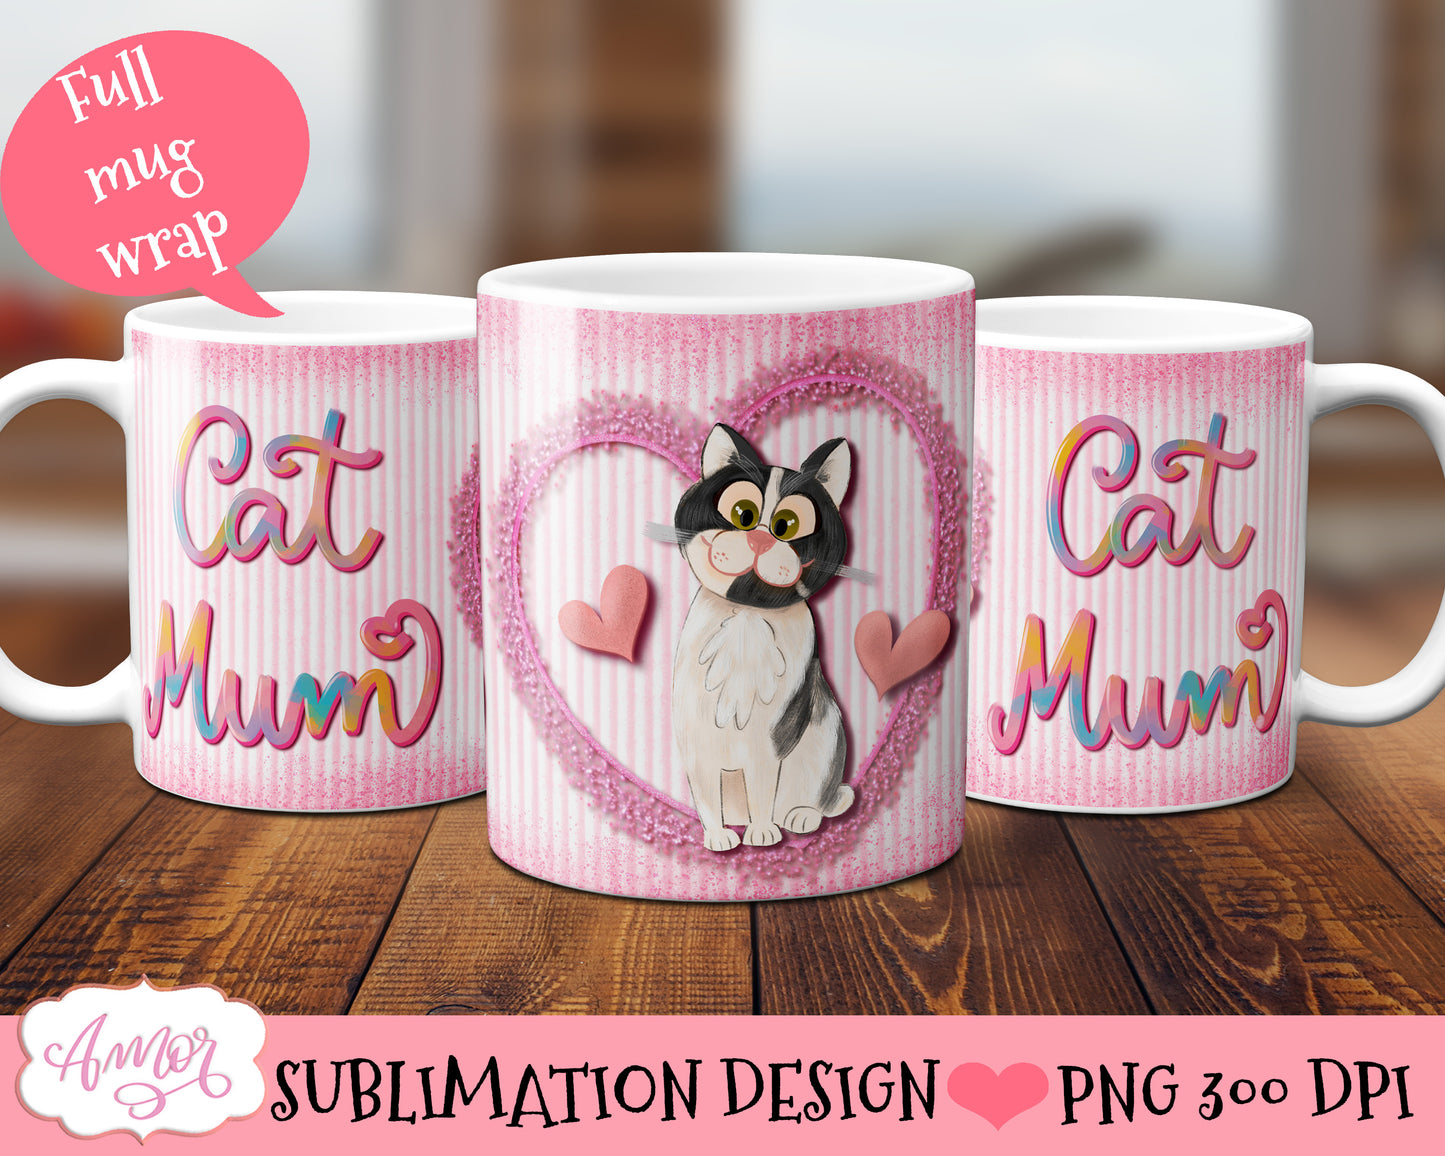 Cat mum mug wrap PNG for Sublimation